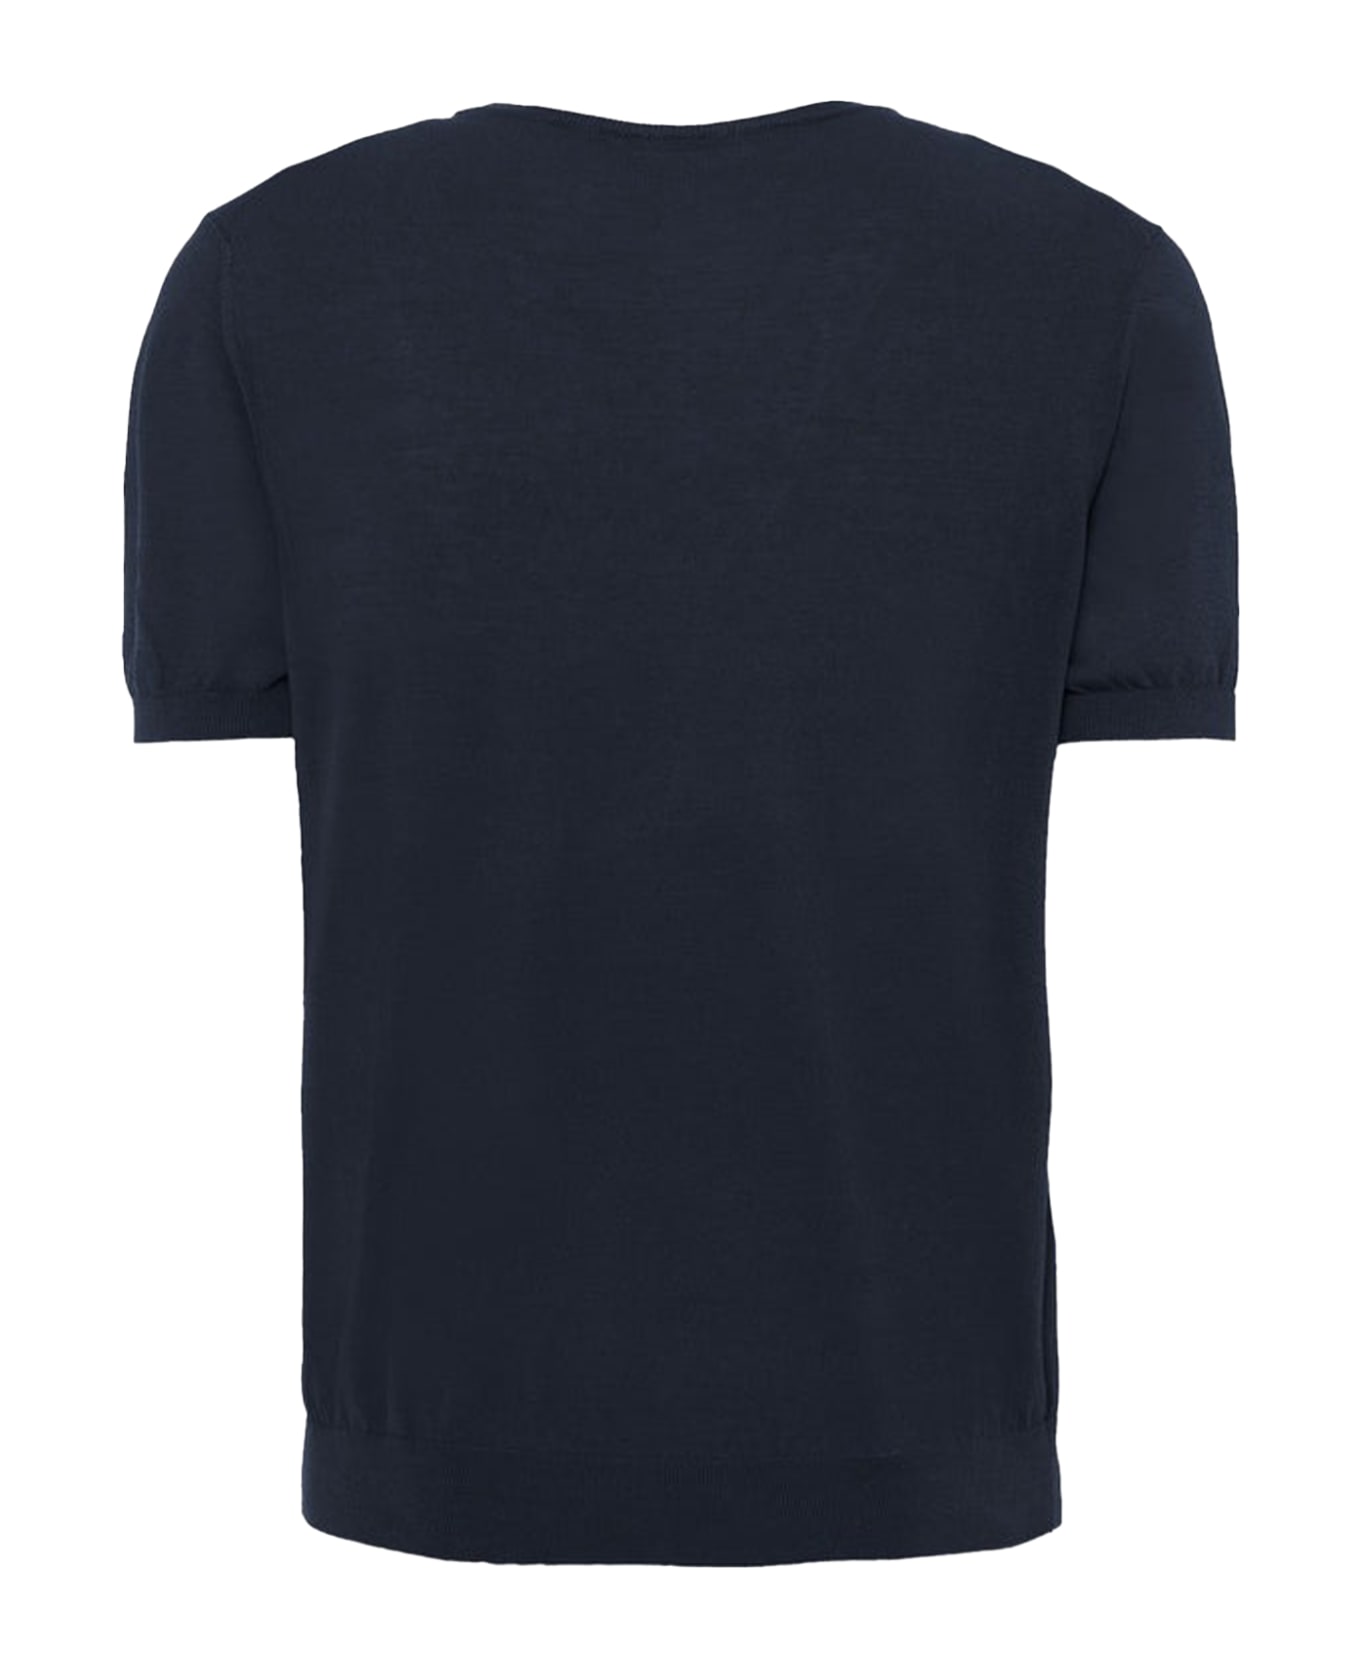 Malo Navy Blue Cotton T-shirt - MARINO